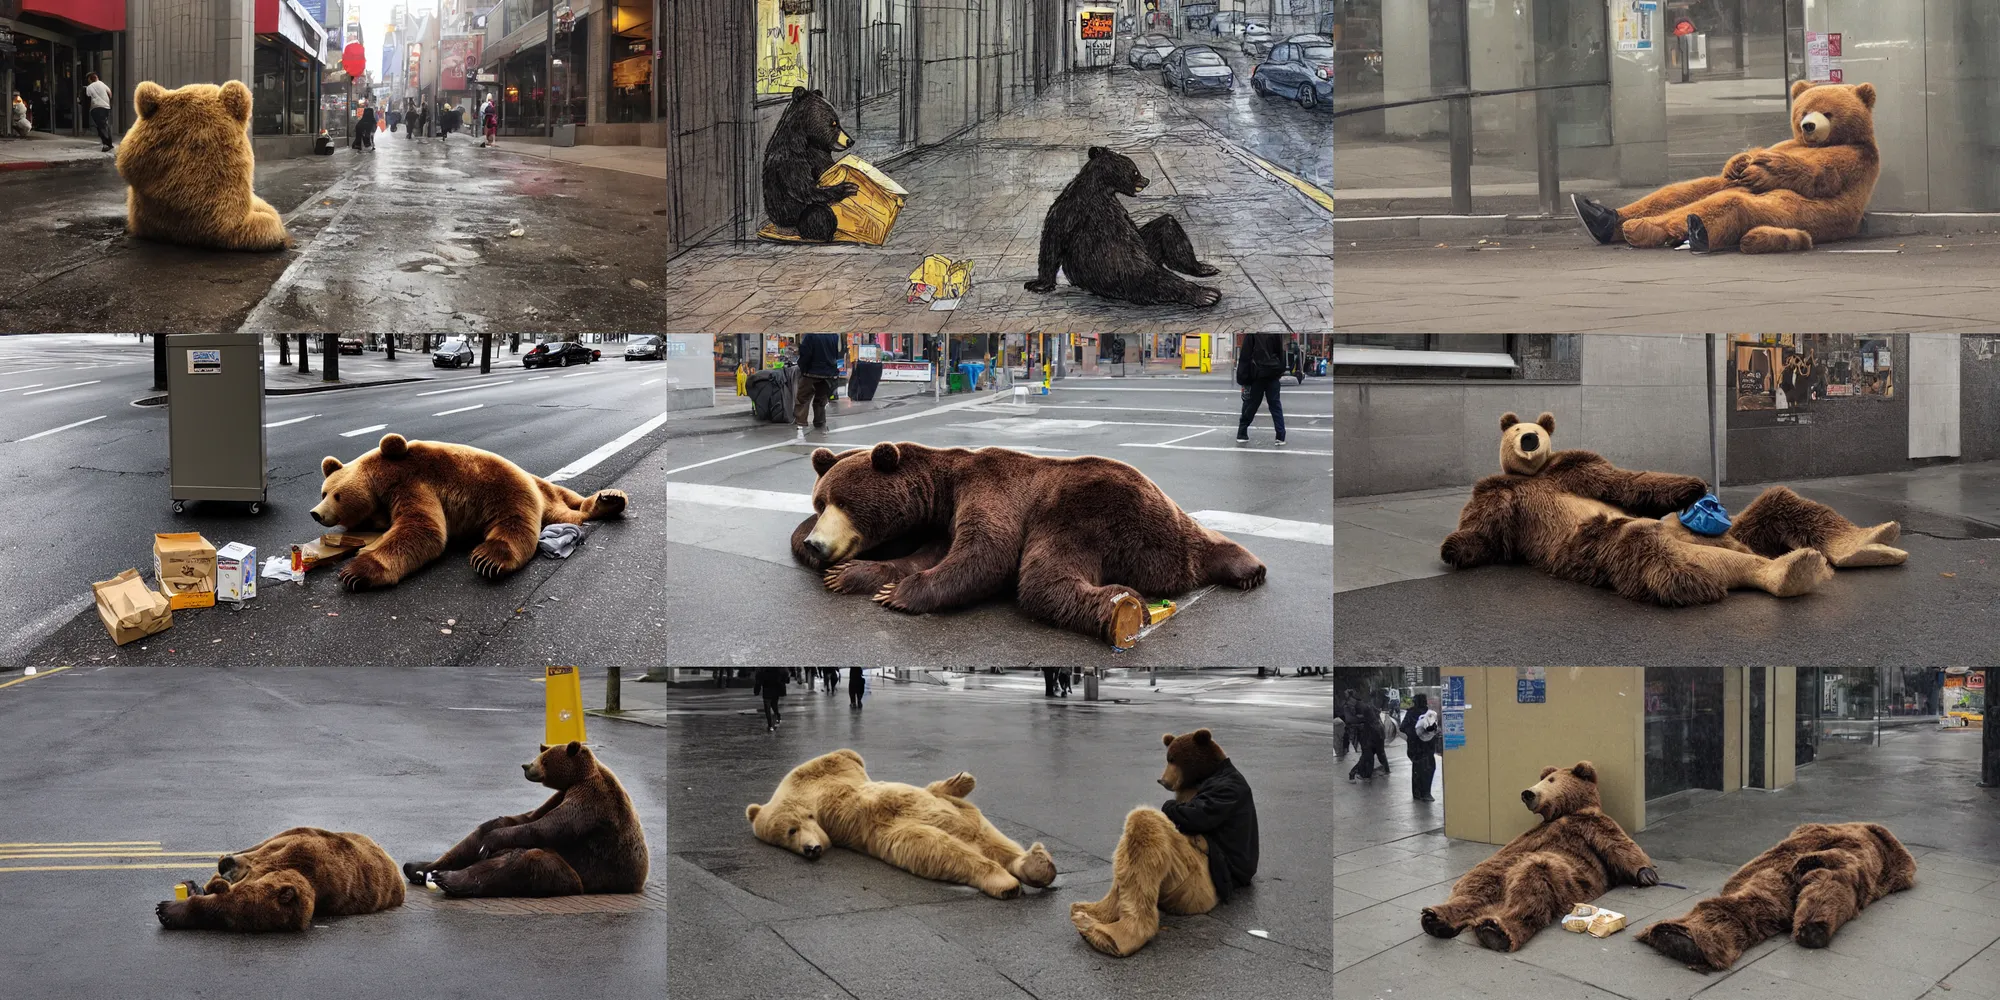 Prompt: hyper - realistic anthropomorphic bear homeless laying in a dark rainy street corner under carton boxes, honey dispensary